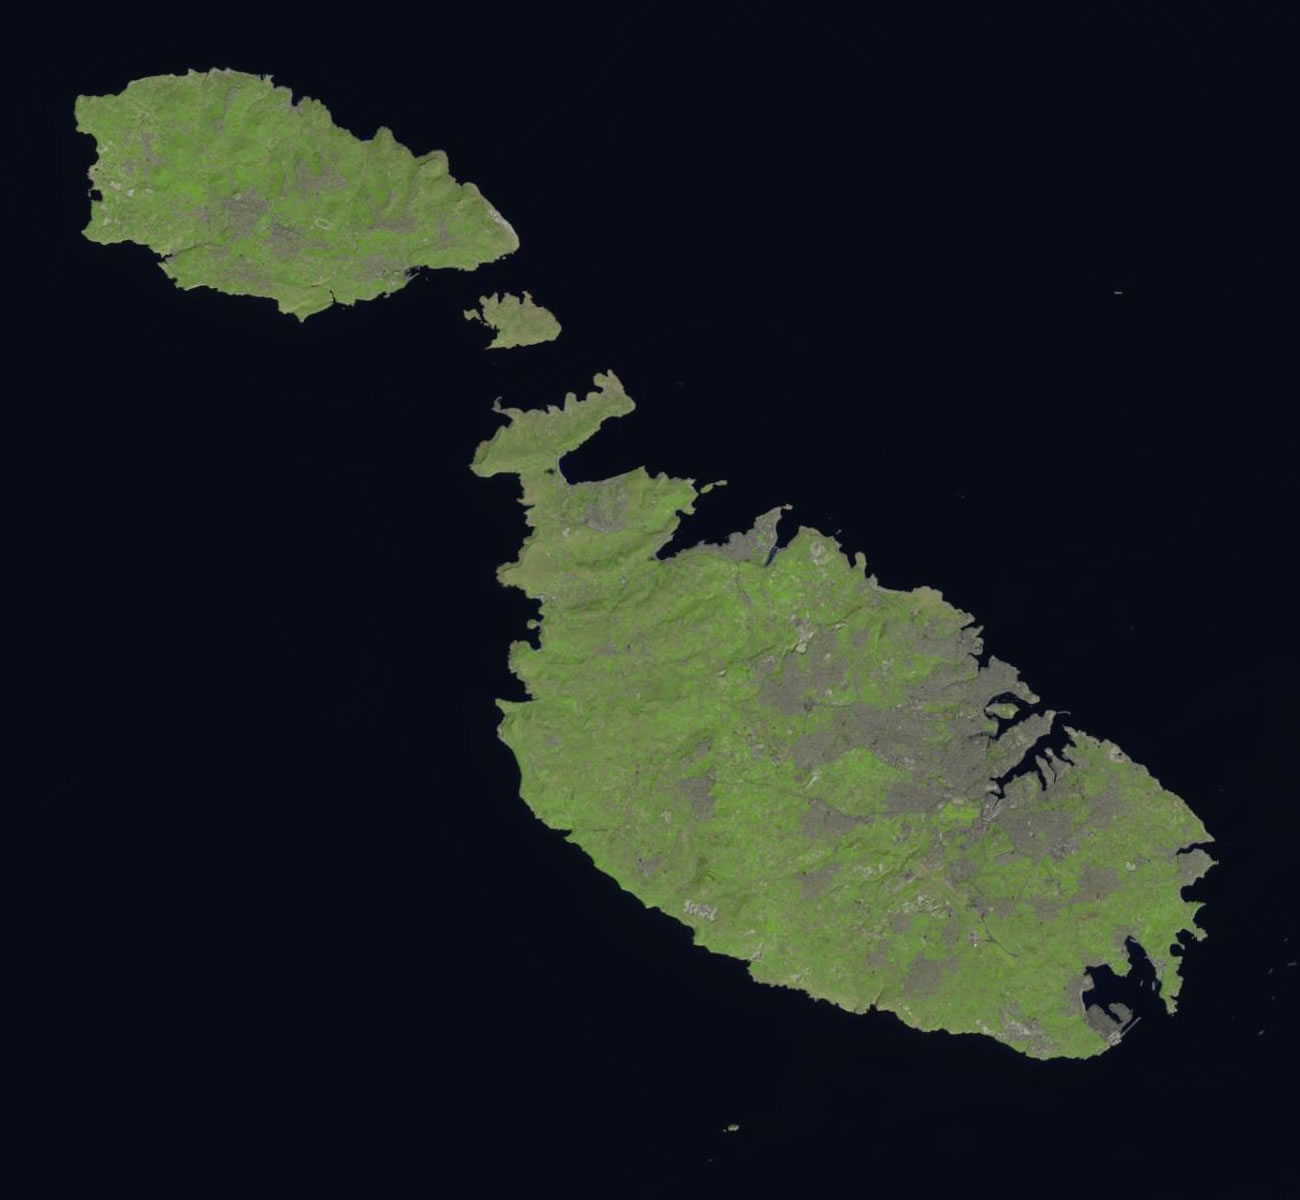 Malta Map And Satellite Image